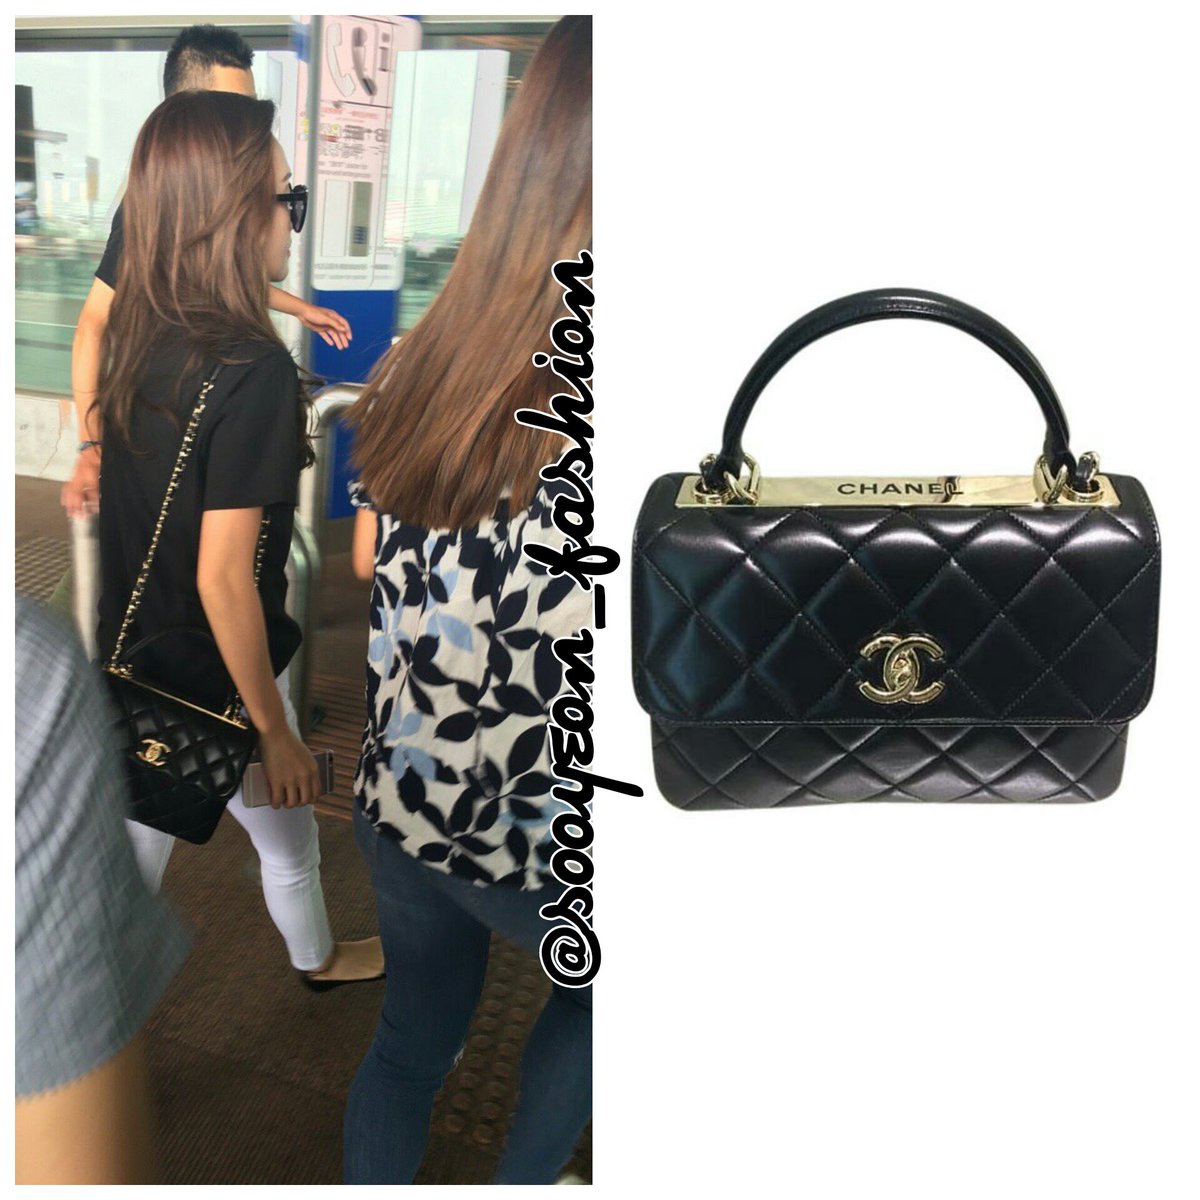 jsy fashion on X: 160810 Beijing Airpot CHANEL: Small Trendy CC Flap Bag  (Black), $5600  #JessicaJung   / X